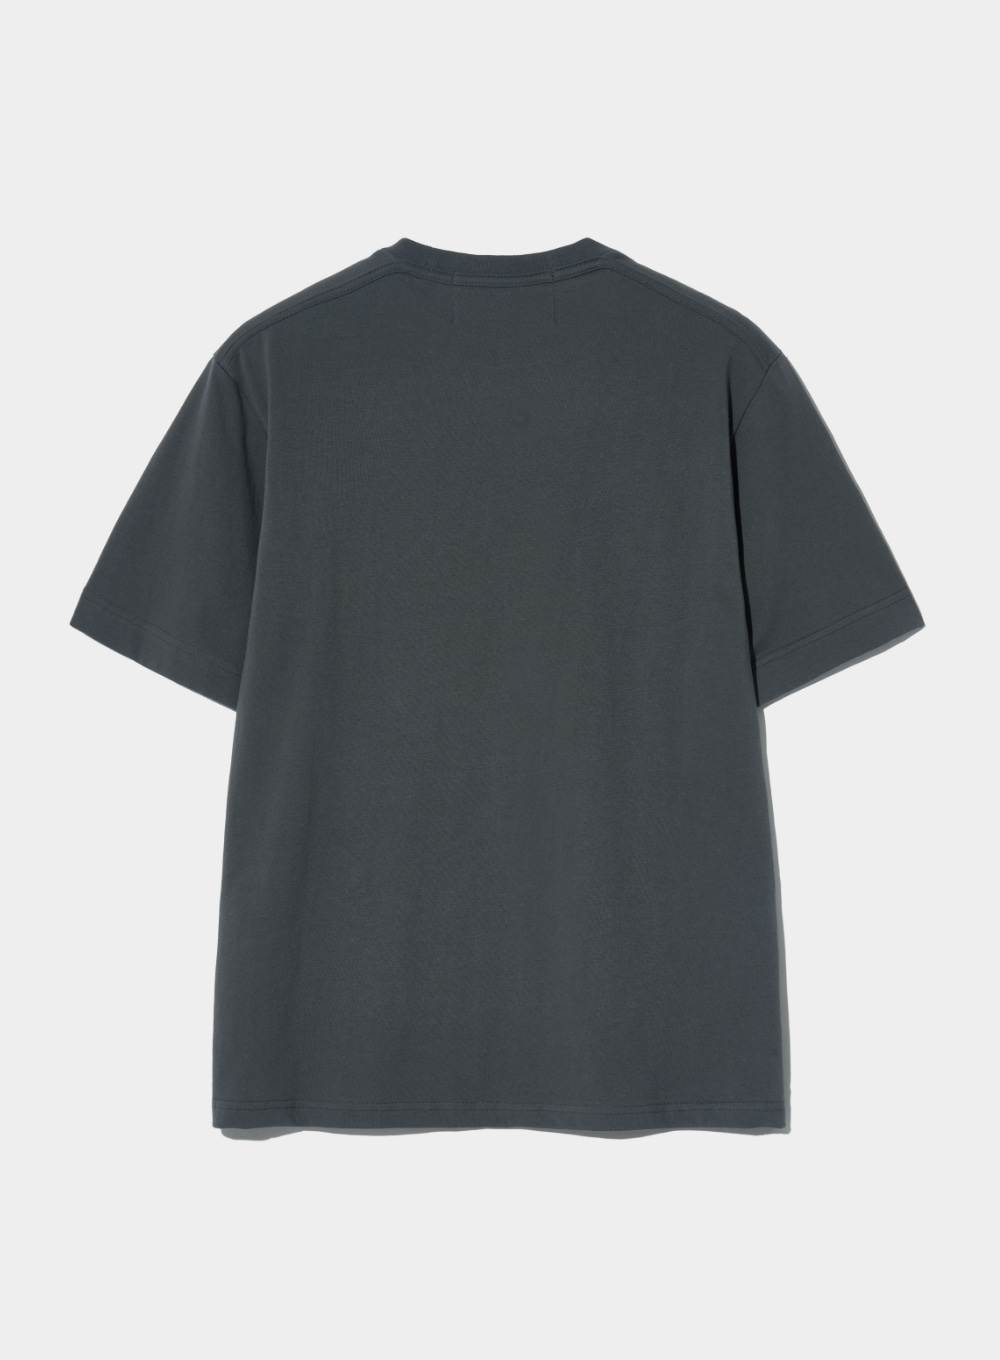 Sailing Graphic T-Shirt - Resort Charcoal